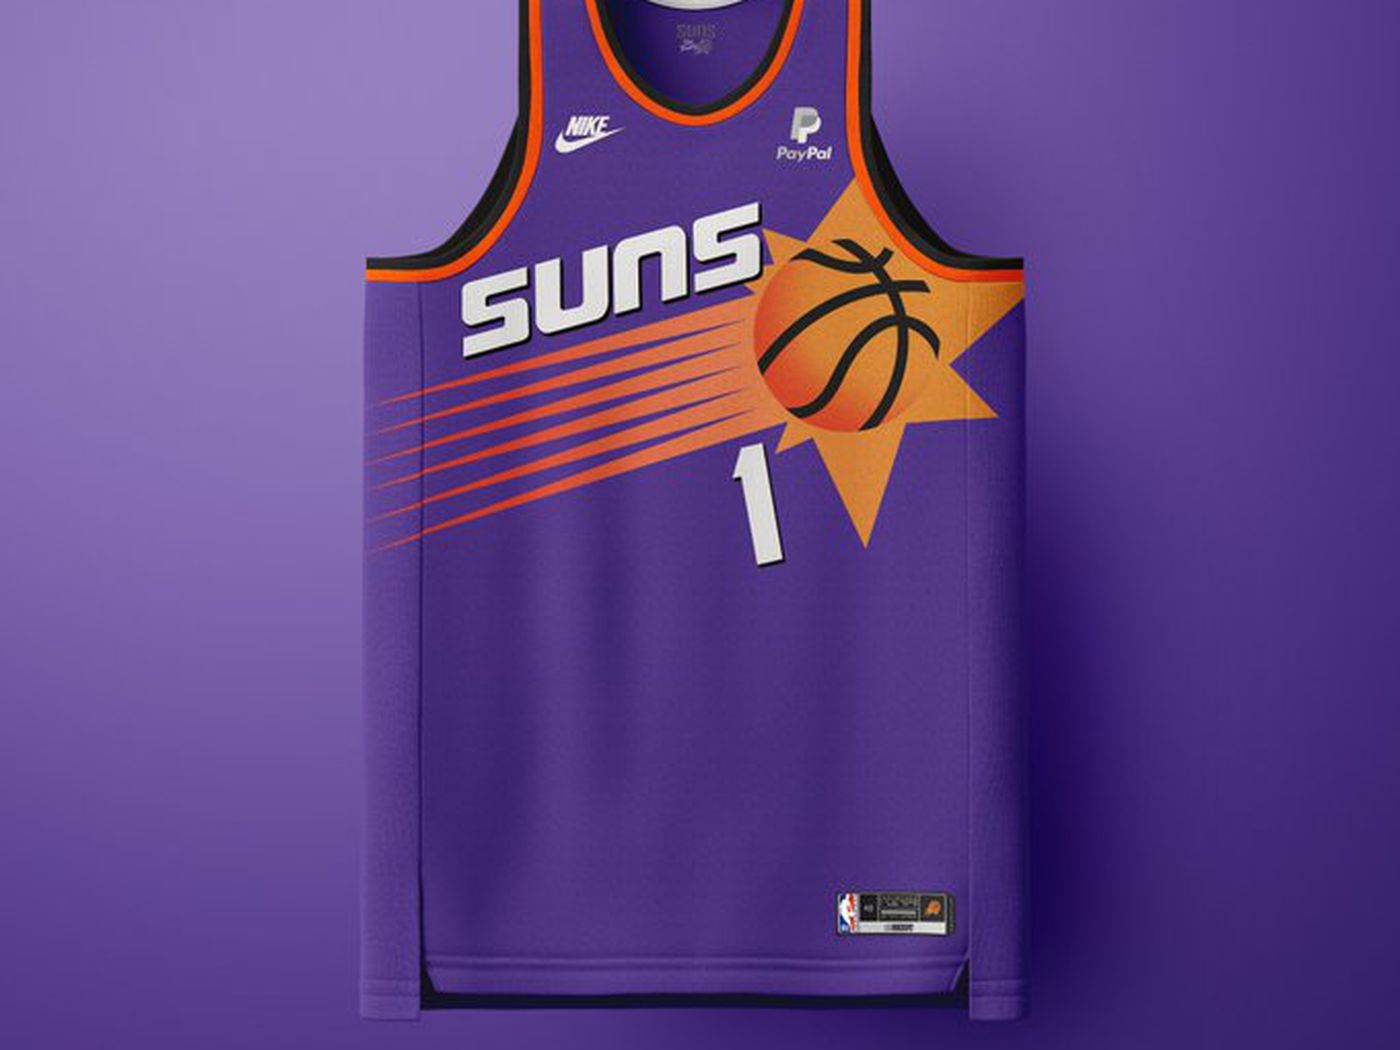 suns official jersey